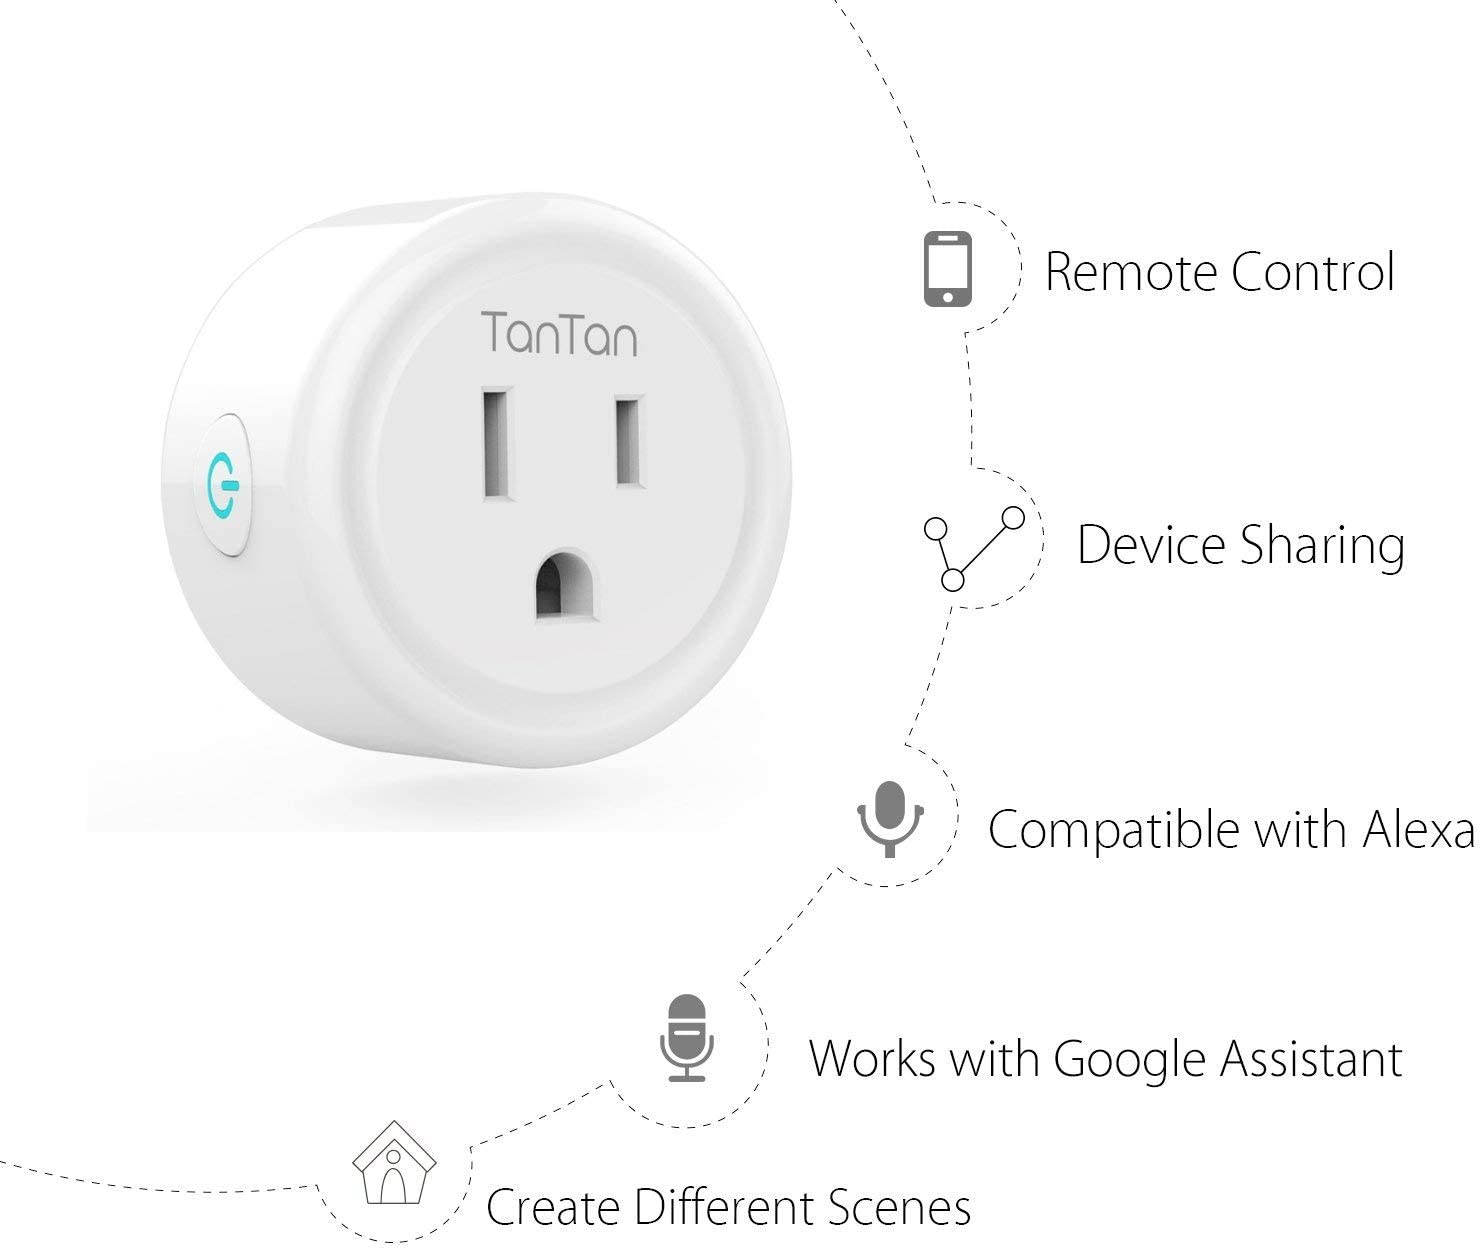 Gosund WP3 Mini Smart Plug Smart Life App Remote Control Work With Alexa  Google Home 10A 2.4GHz WIFI Smart Socket US Plug